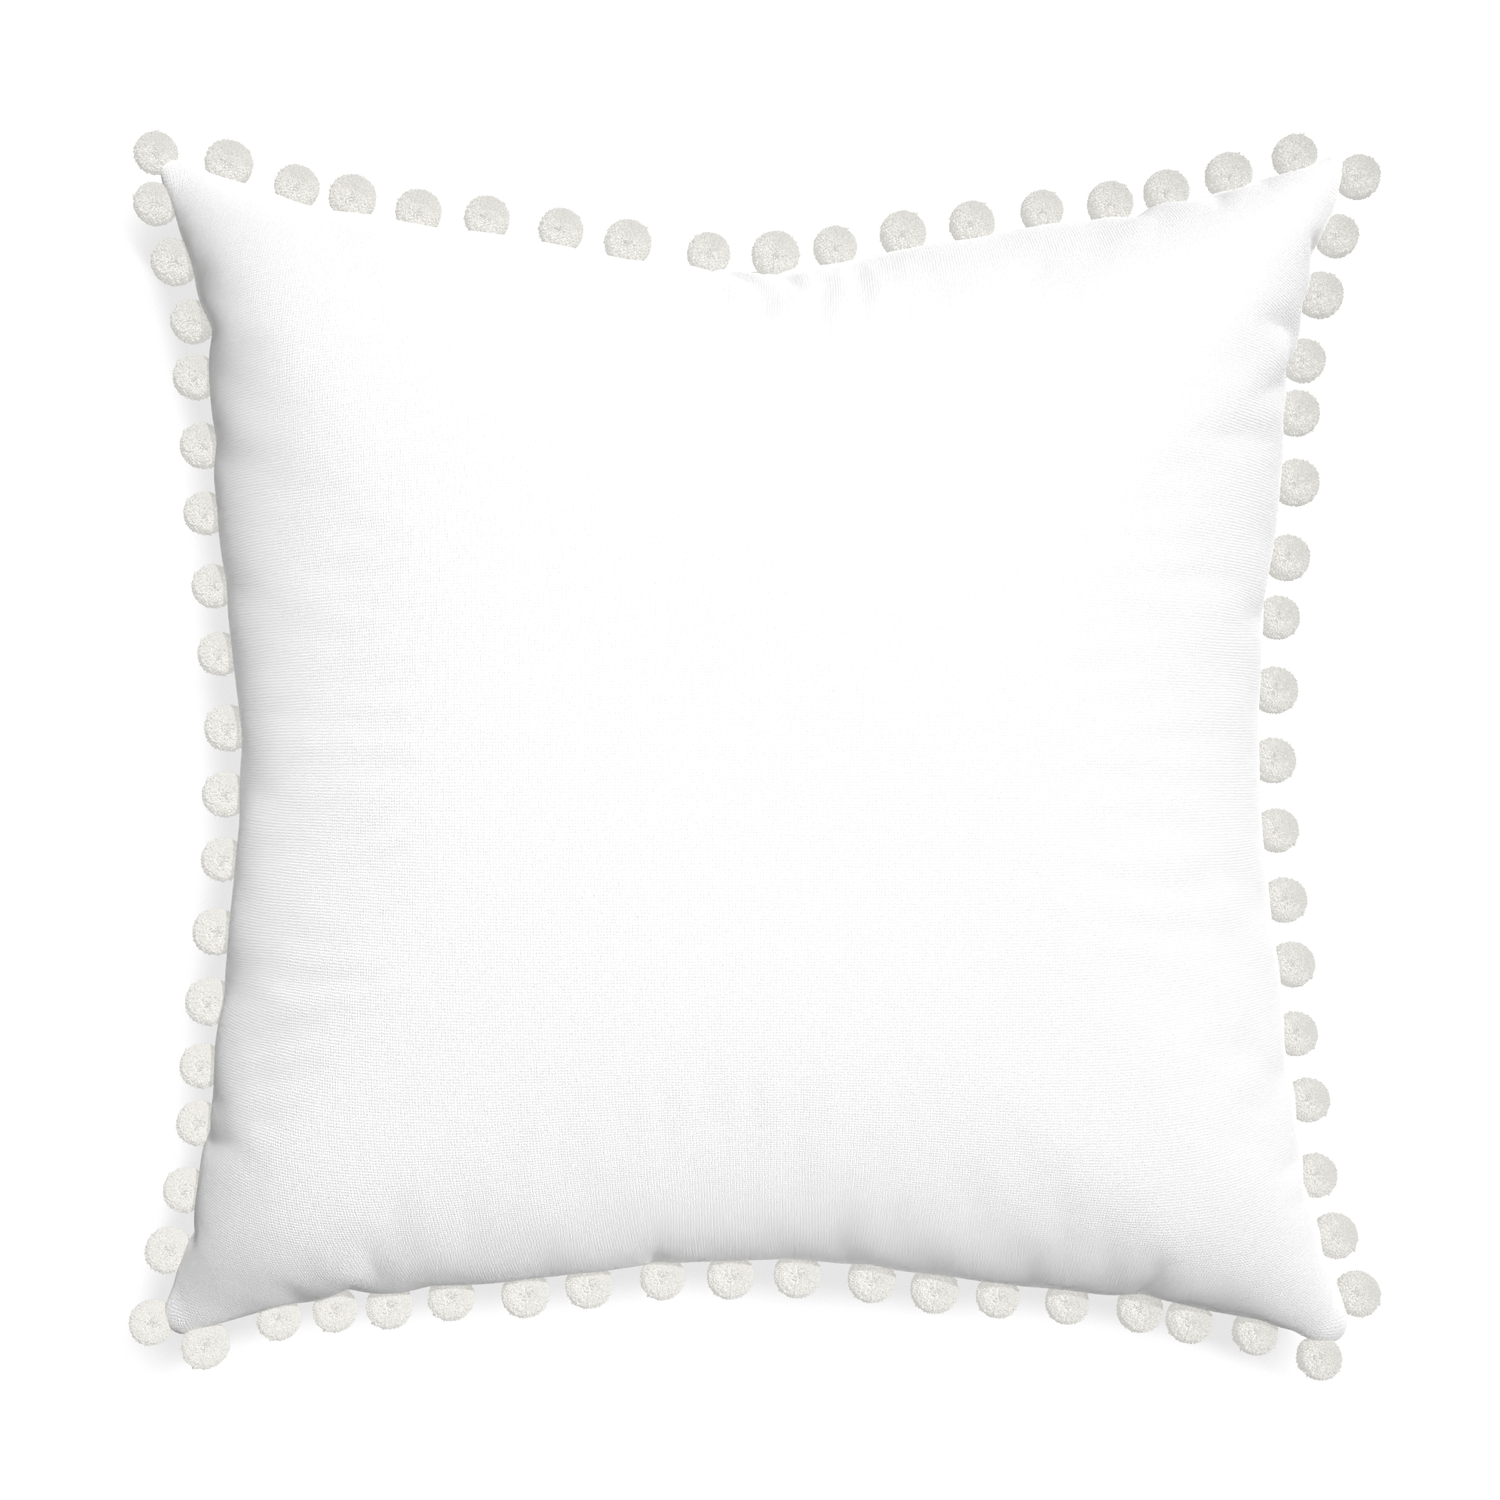 Euro-sham snow custom pillow with snow pom pom on white background